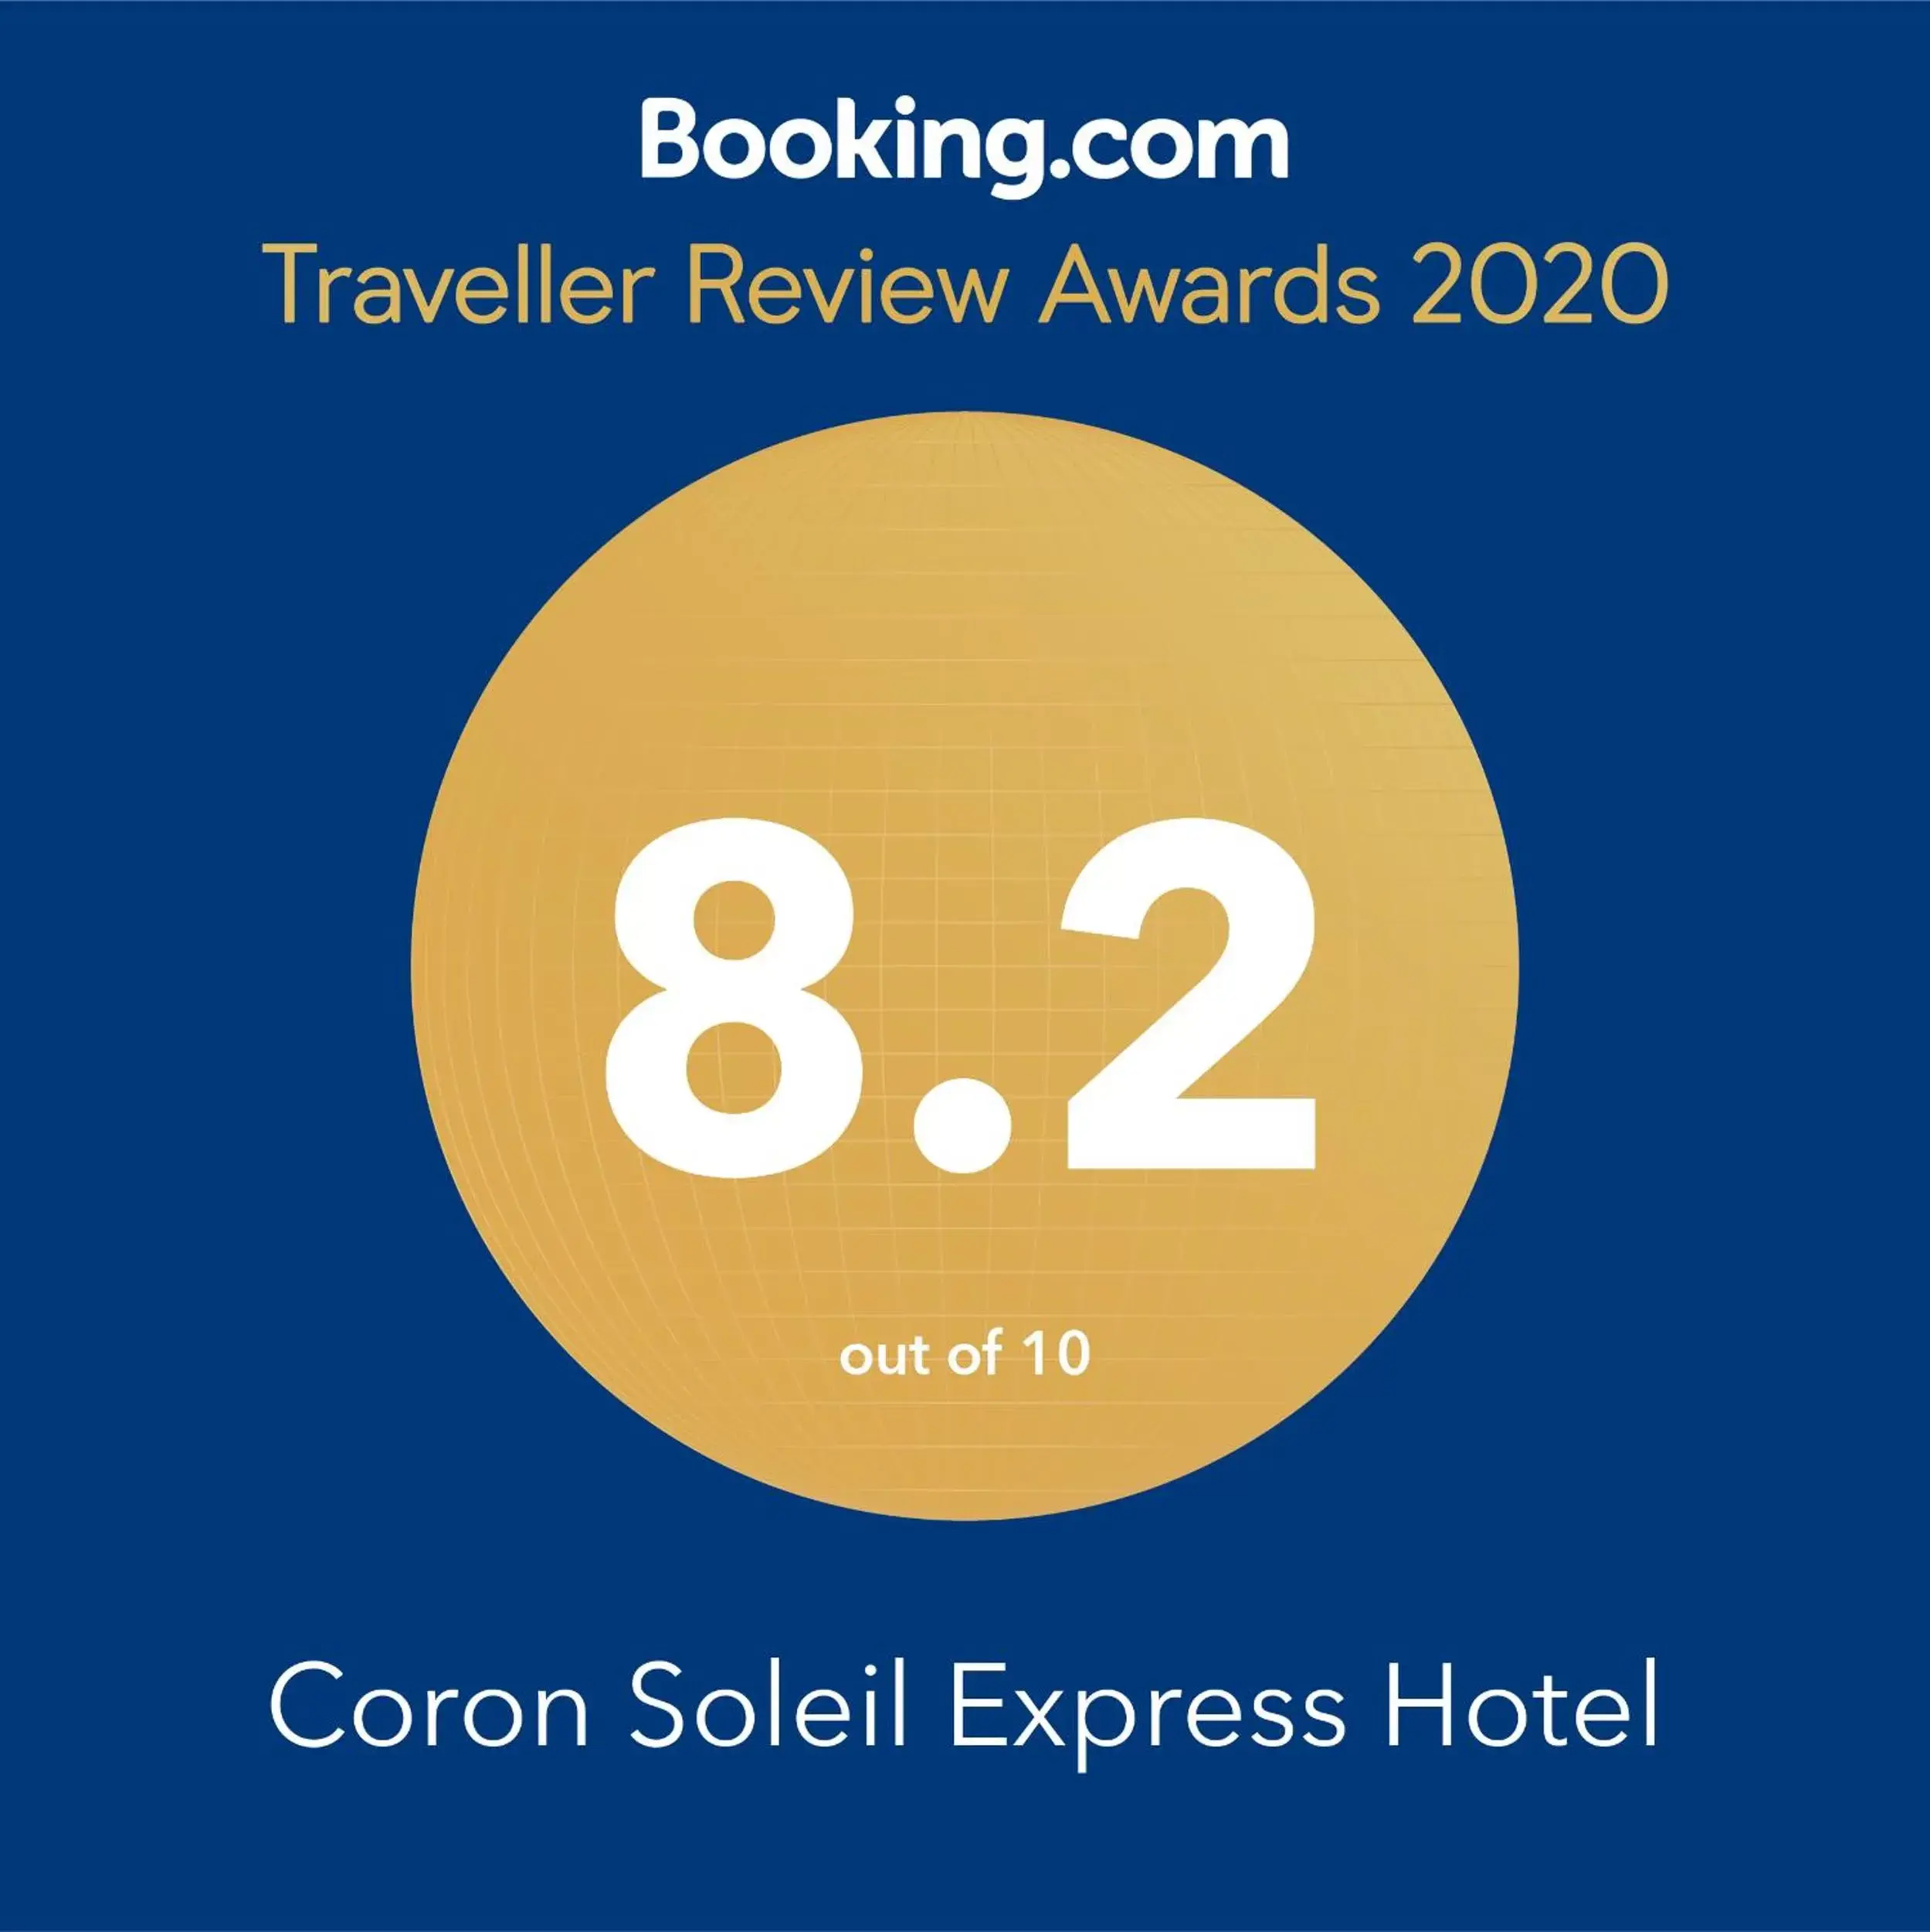 Coron Soleil Express Hotel